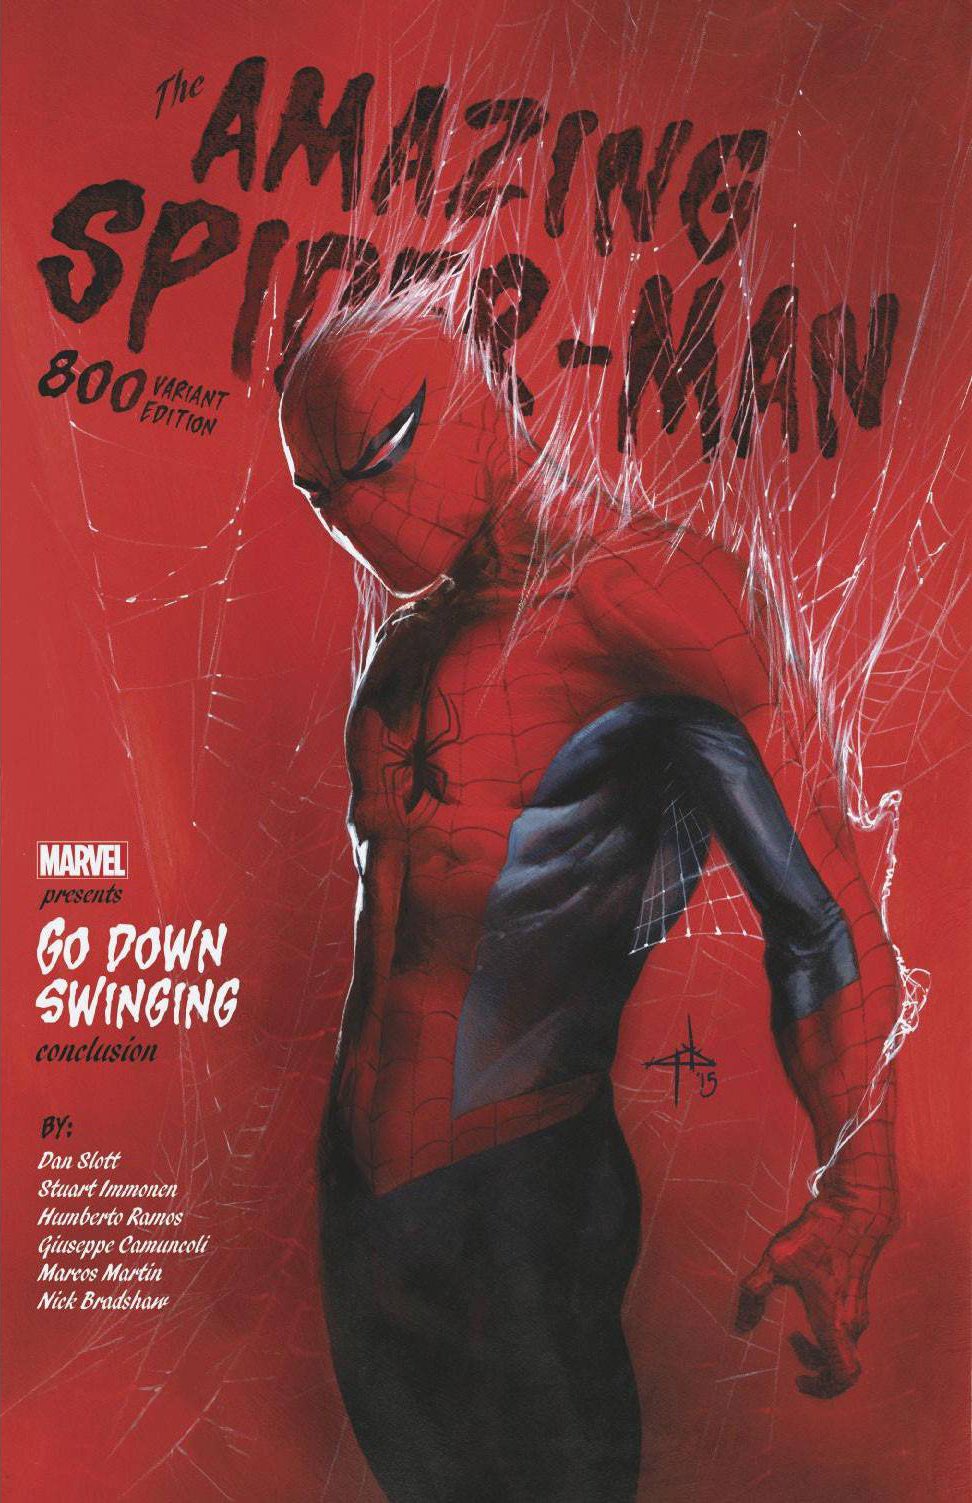 Amazing Spider-Man #800 [N] Dell'Otto INCENTIVE 1:25 trade dress